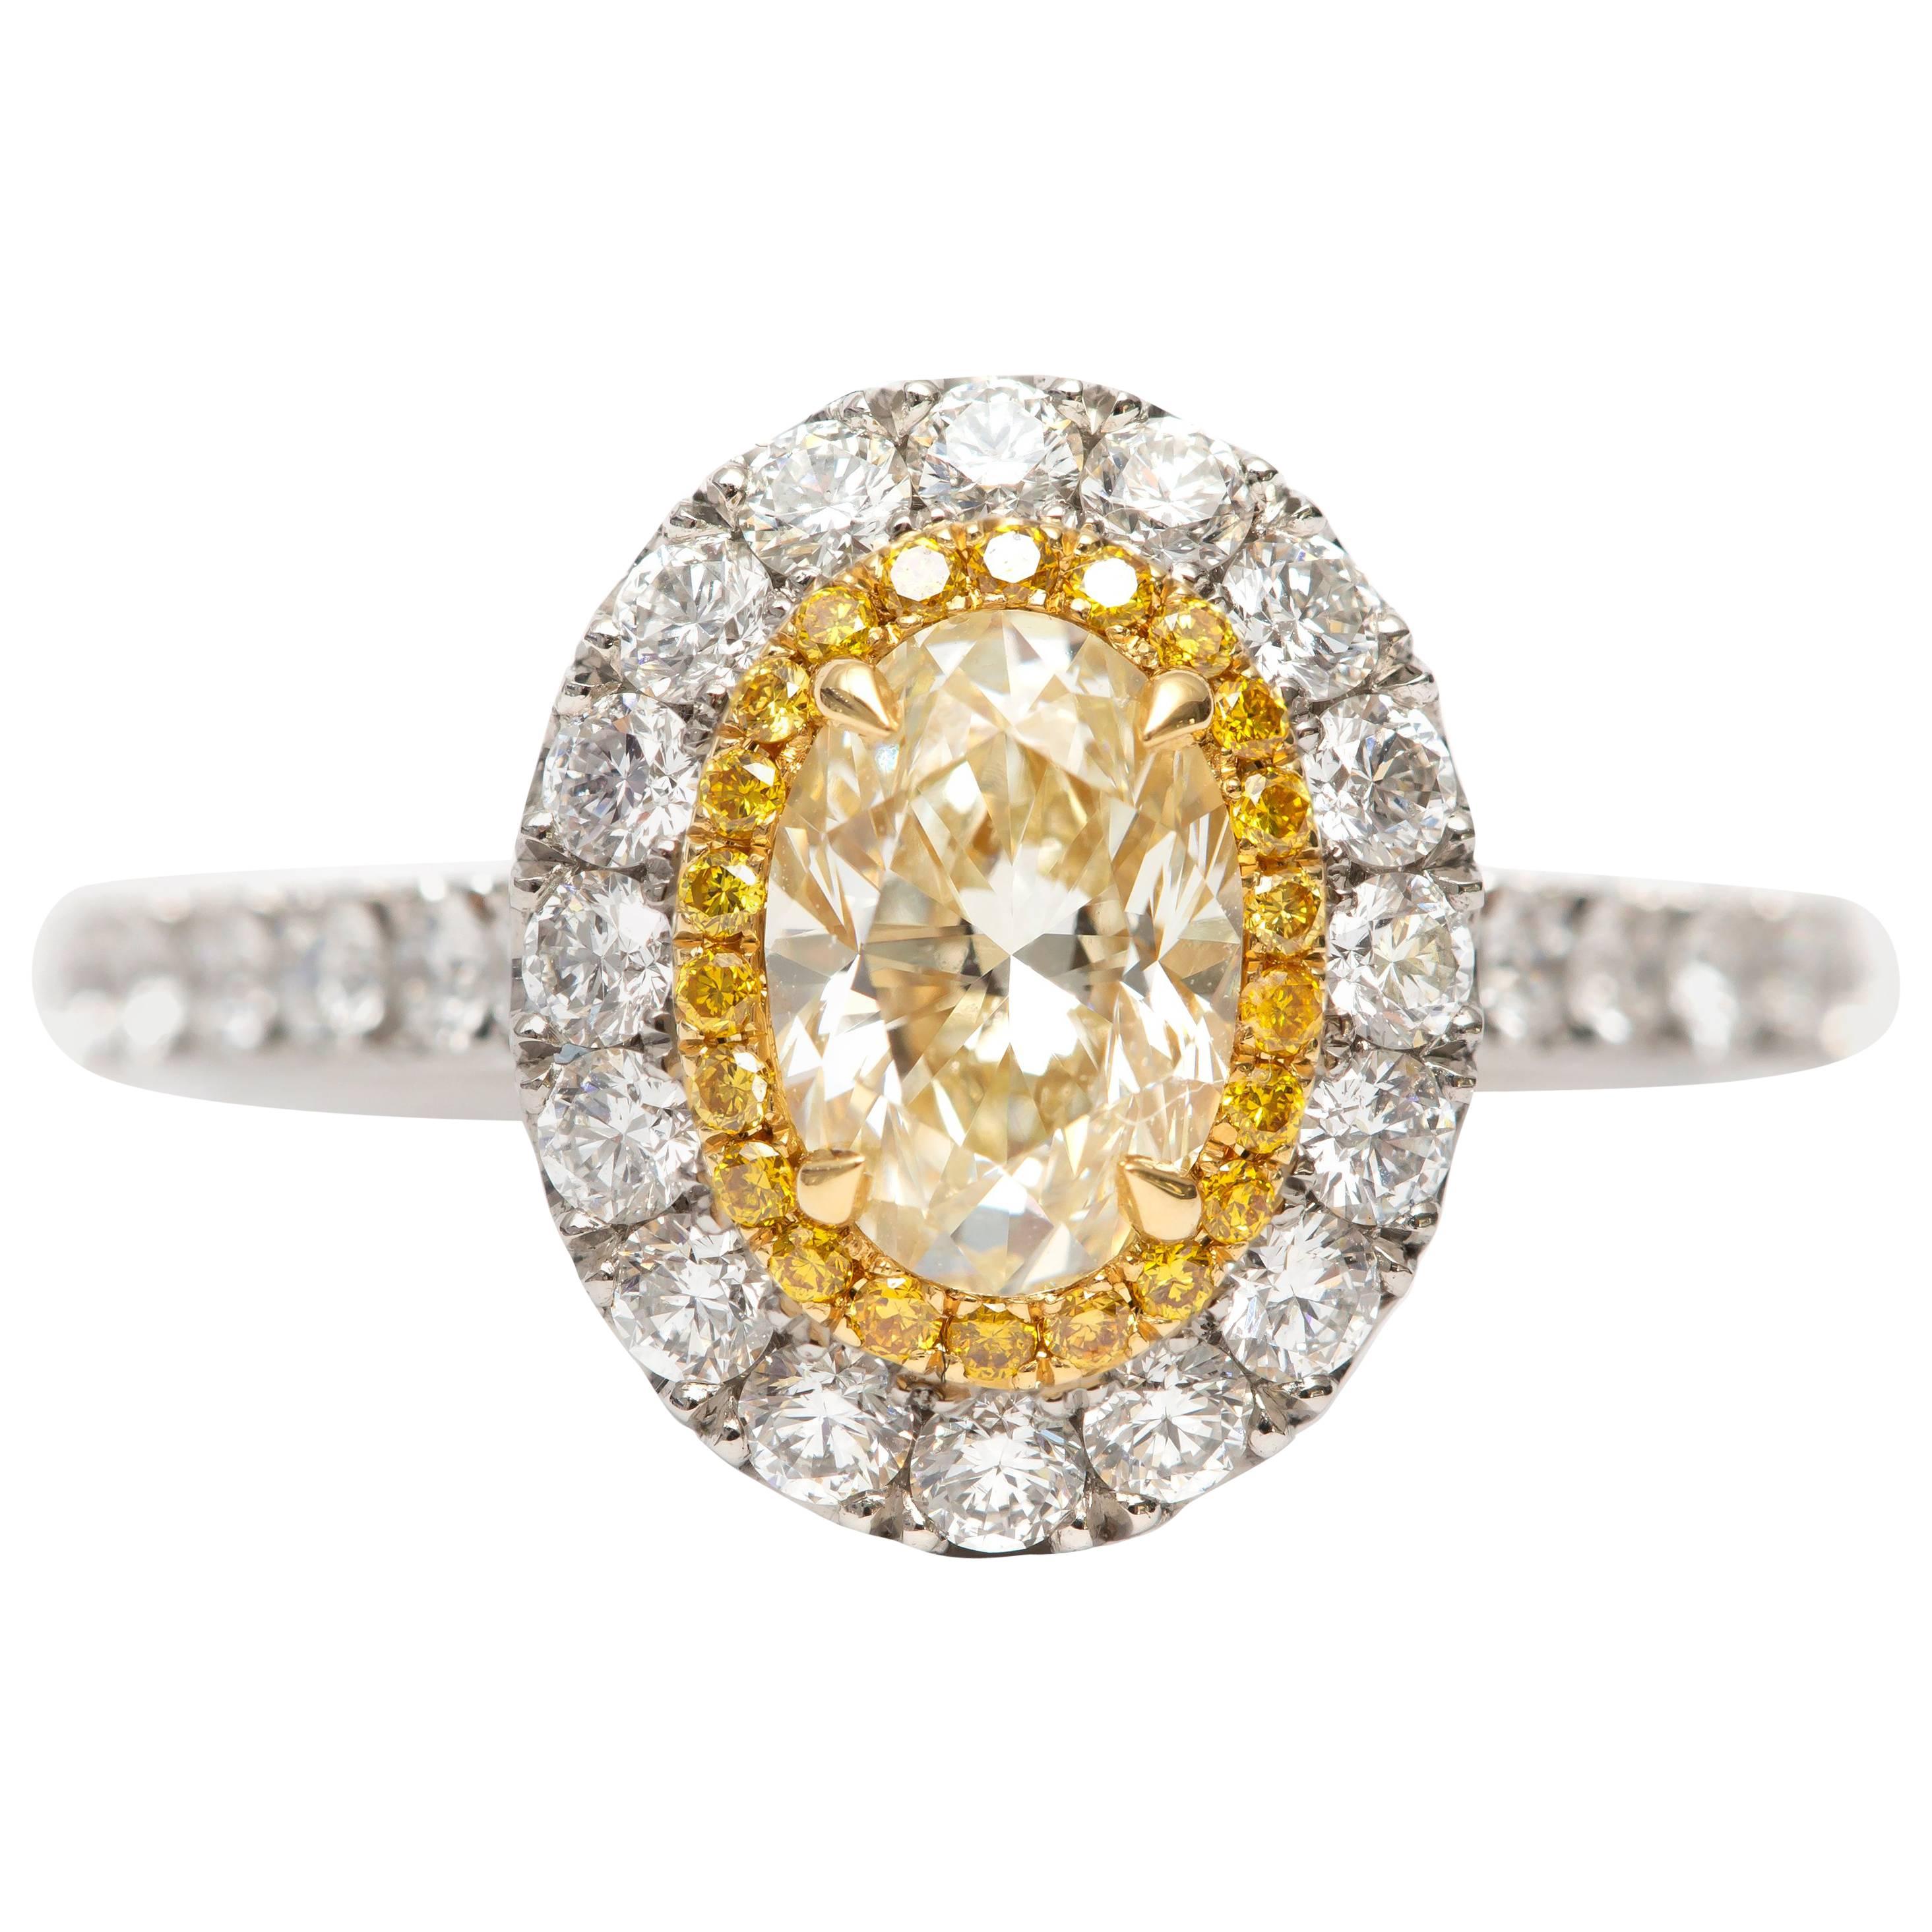 Platinum 1.81 Carat Yellow Oval Cut Diamond Double Halo Modern Engagement Ring